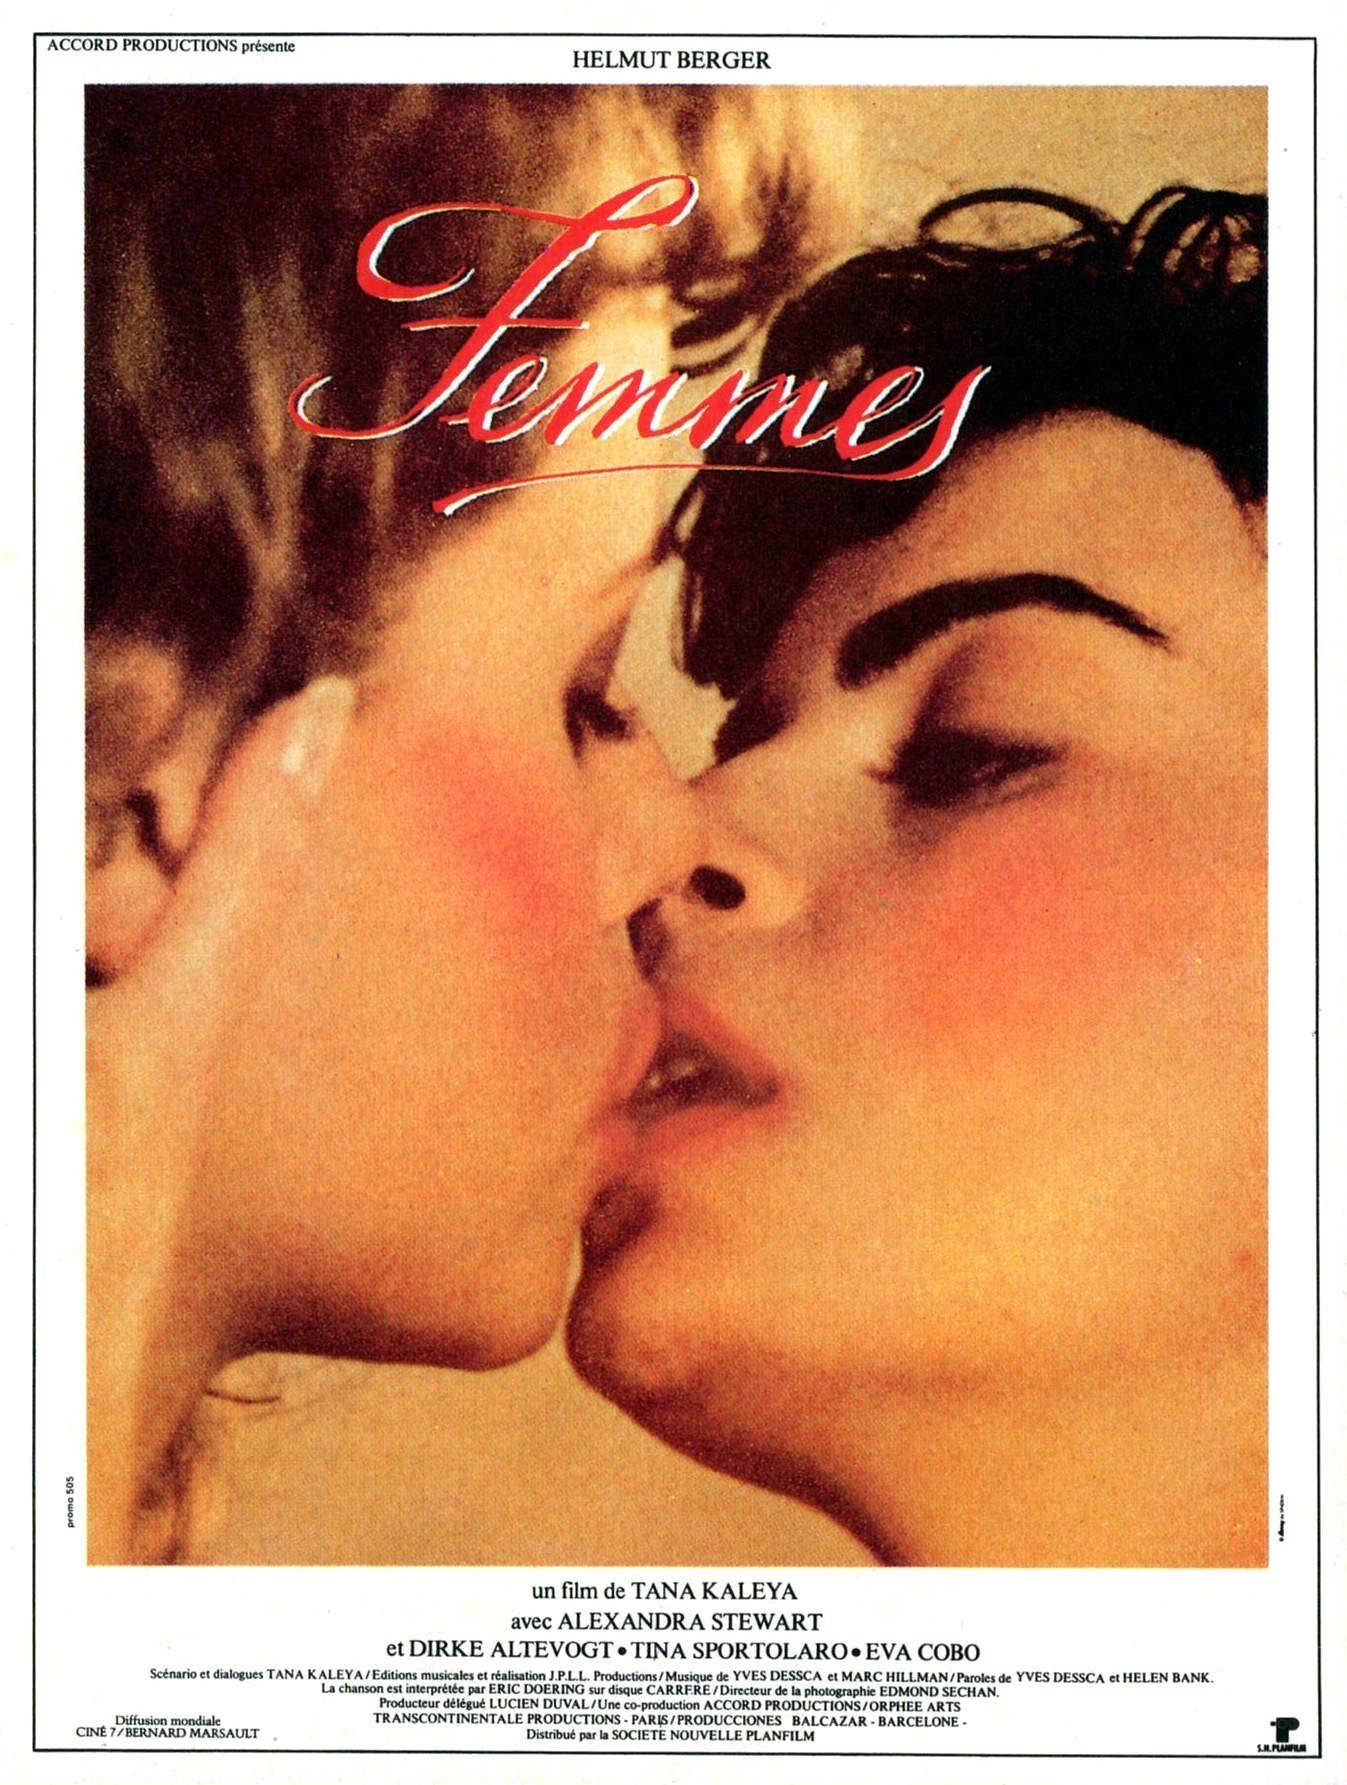 Femmes (1983) with Helmut Berger on DVD 2